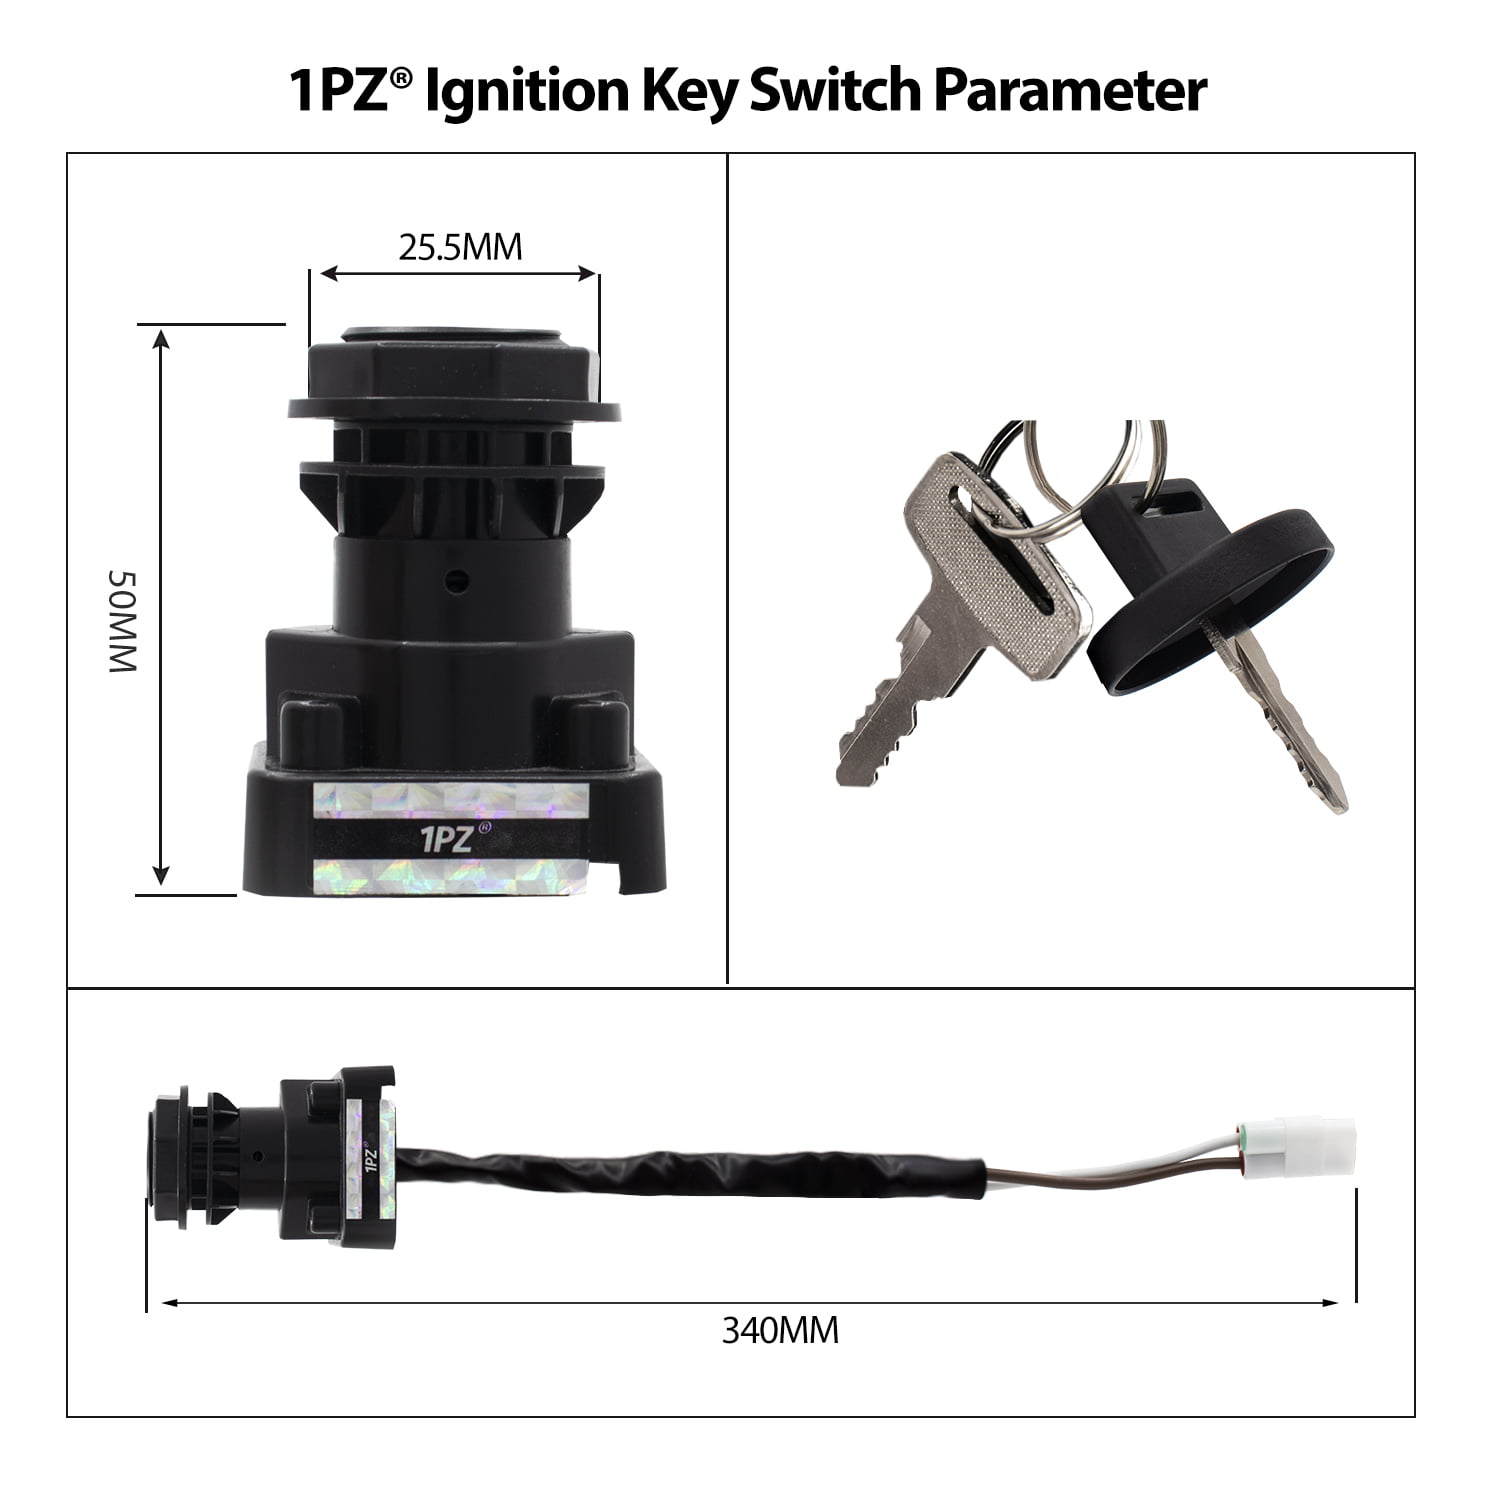 1PZ KS7-K01 Ignition Key Switch fits Kawasaki KFX-700 KSV-700 2004 2005 2006 2007 2008 2009 27005-1267 27005-1230 